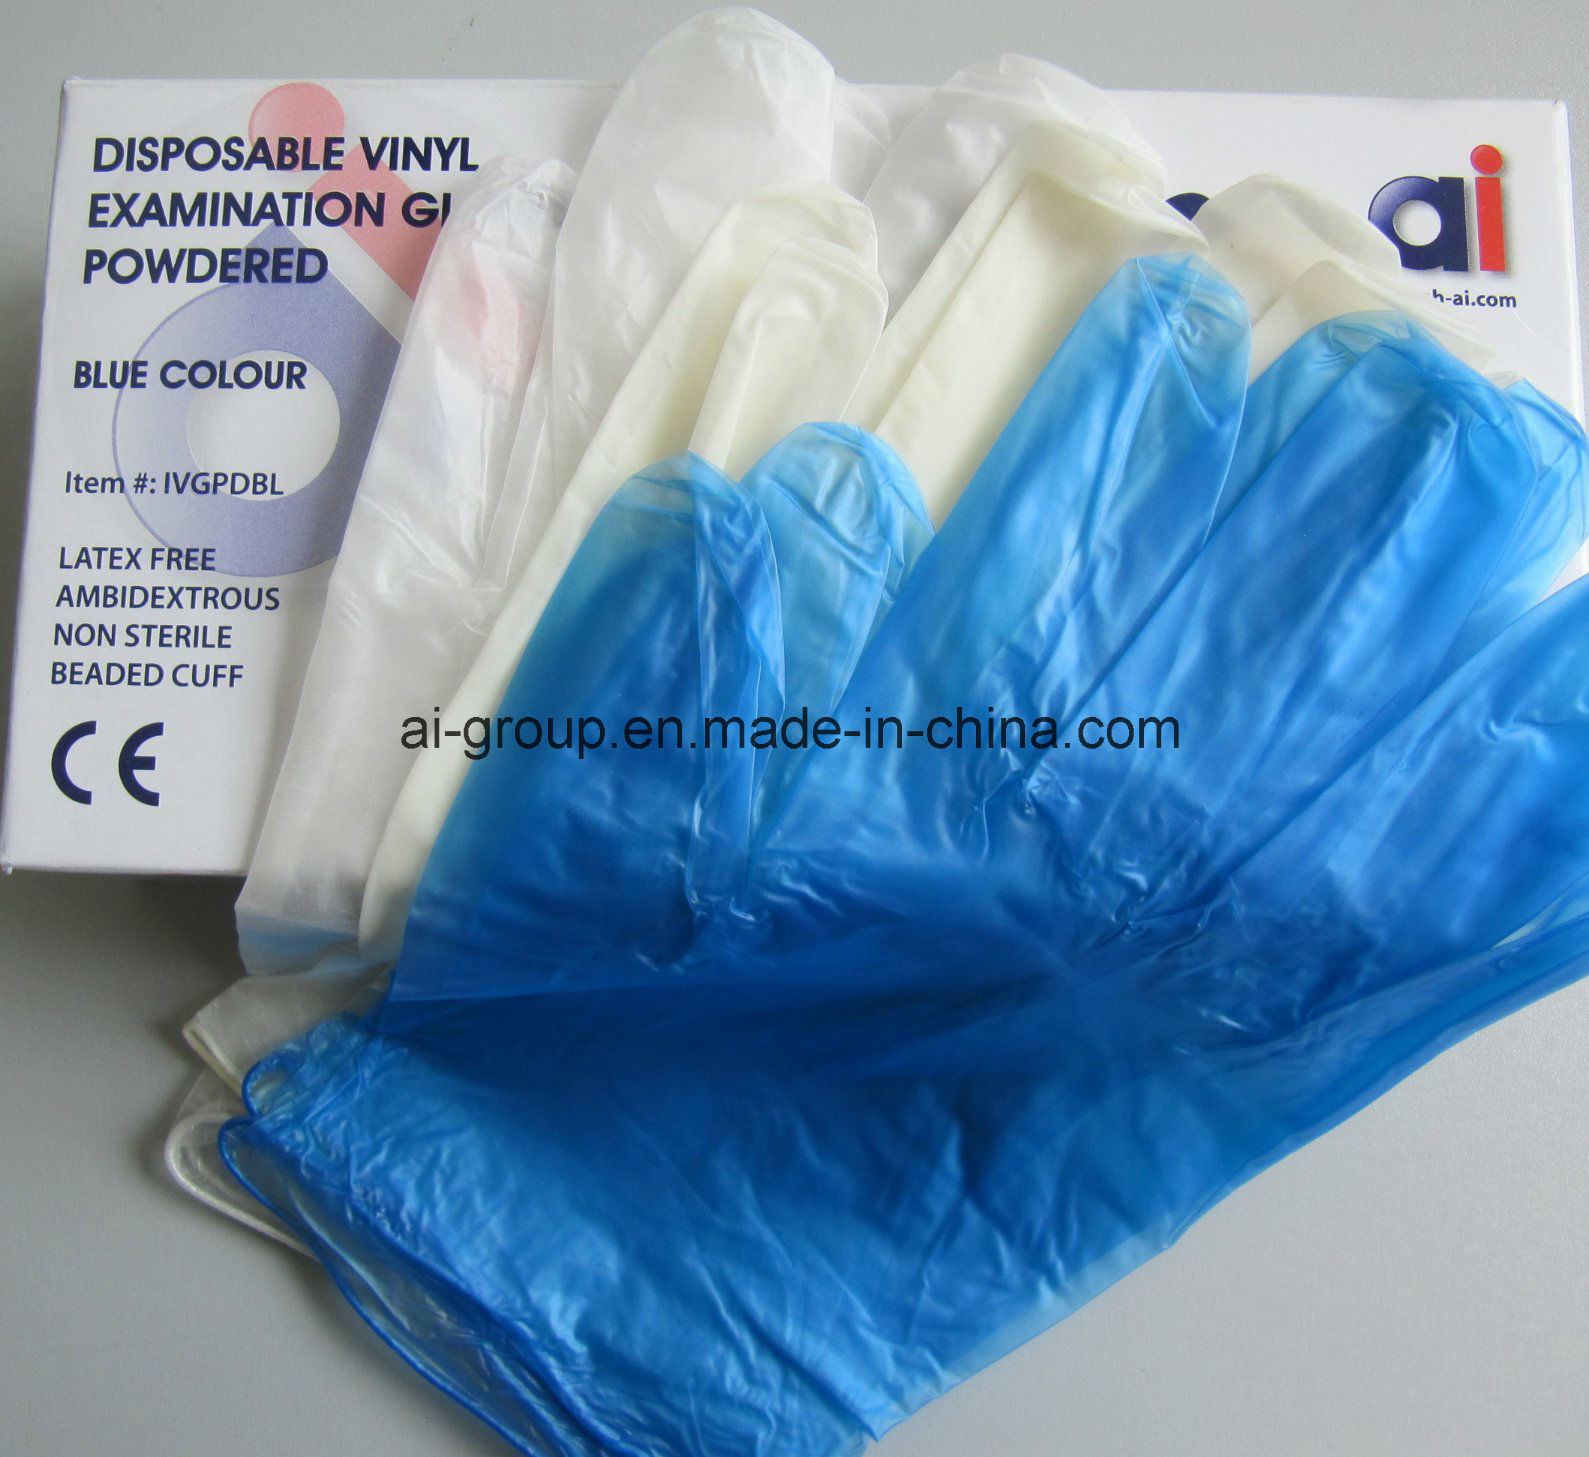 Free of Powder Disposable Vinyl Examination Gloves for Medical Purpose